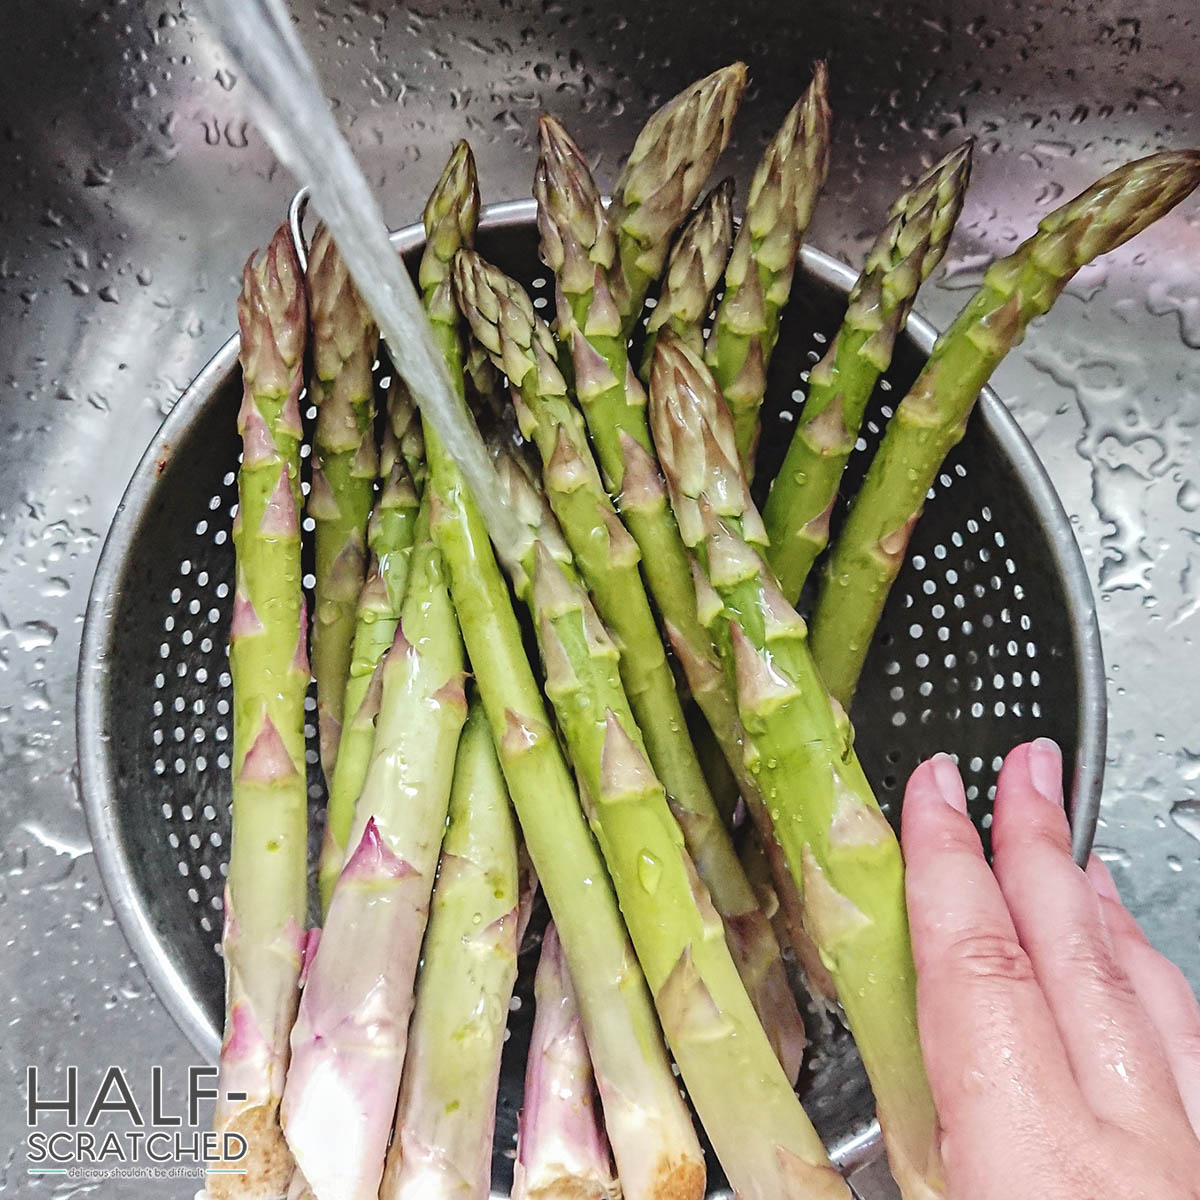 Washing asparagus under running water